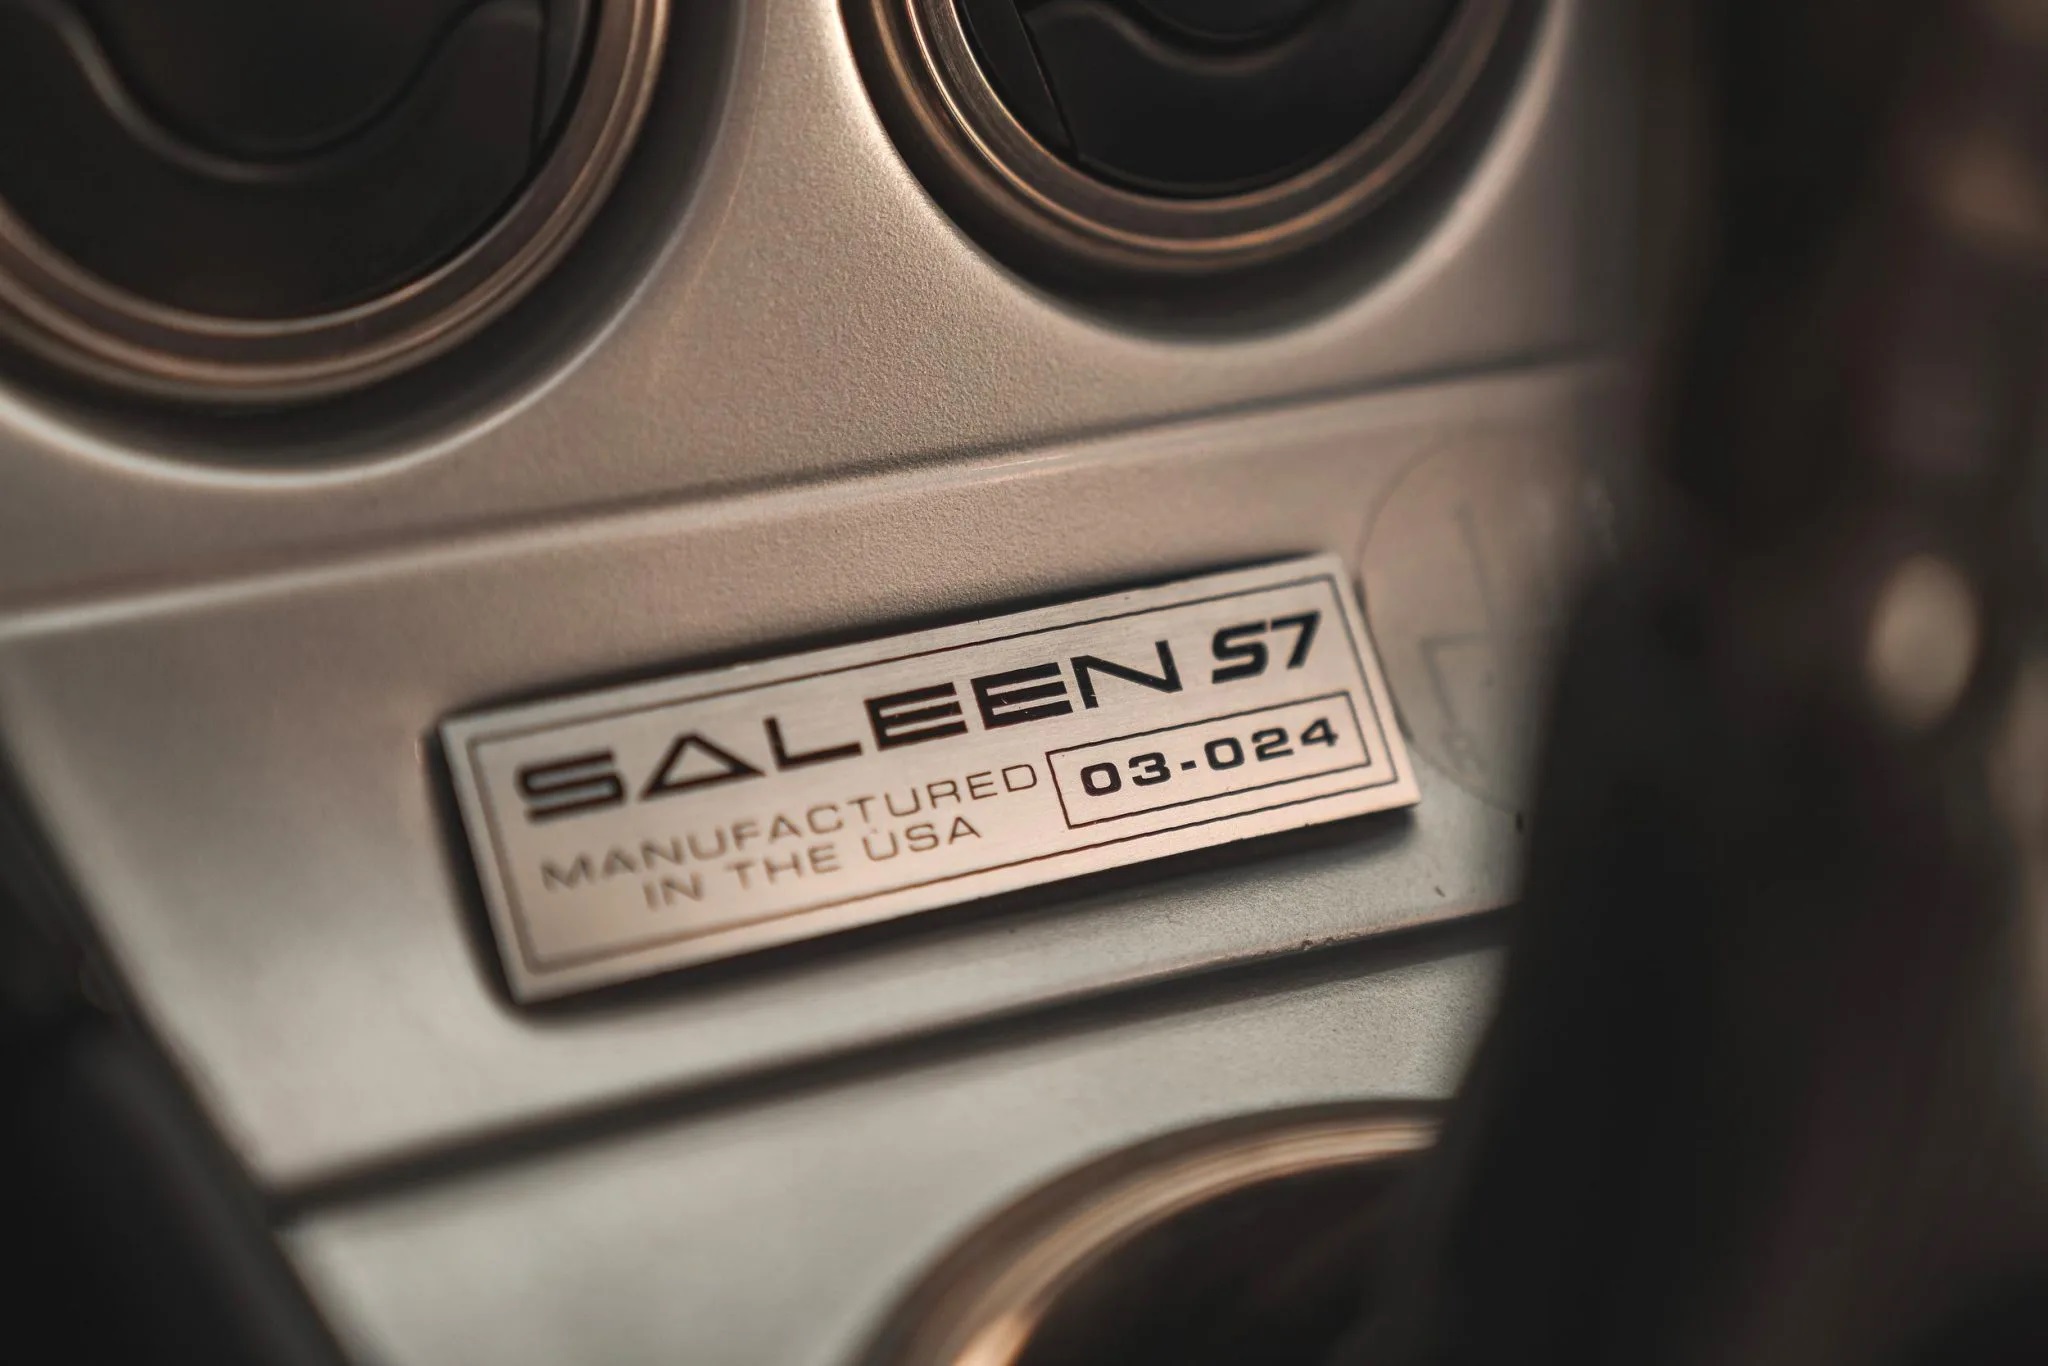  2003 Saleen S7